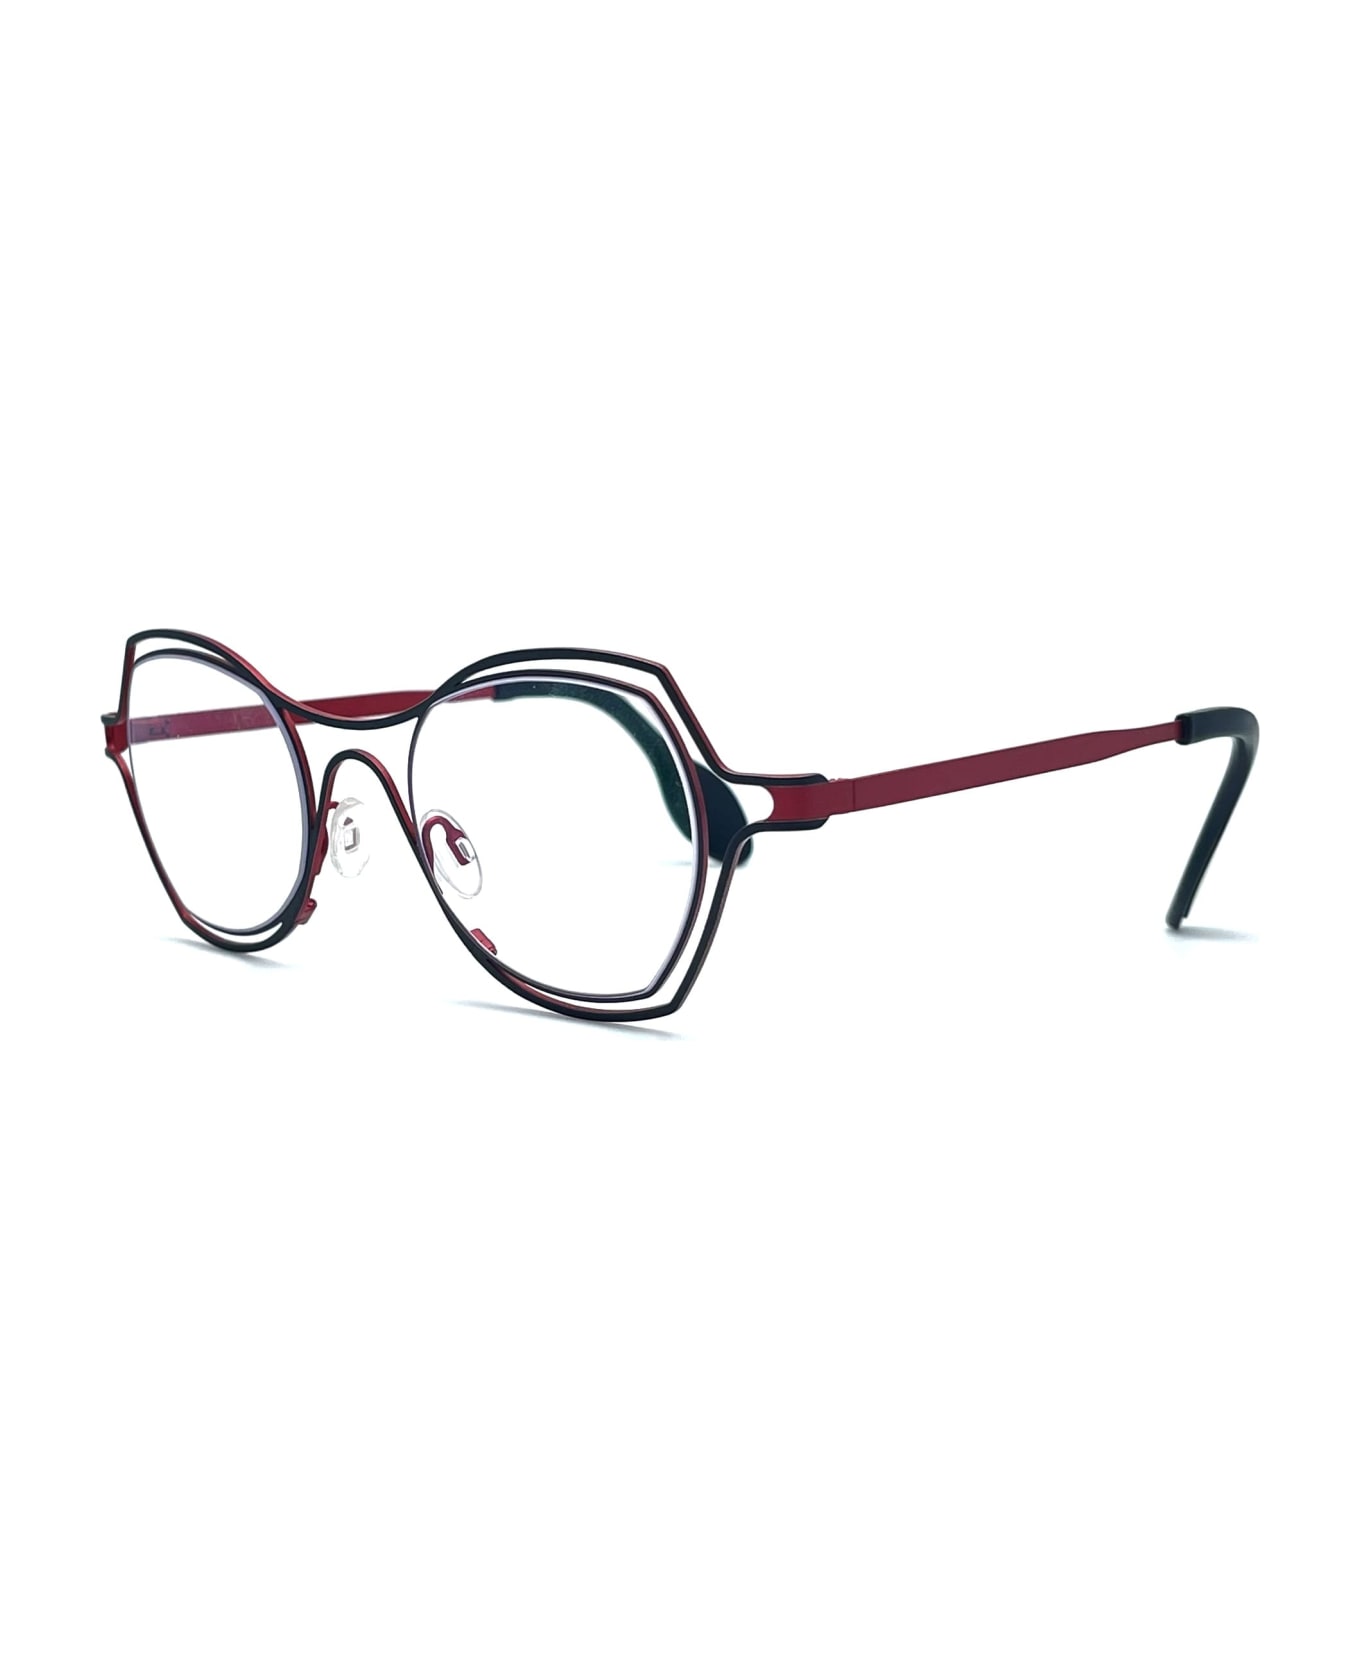 Theo Eyewear Daytona - 323 Glasses - Black/Red